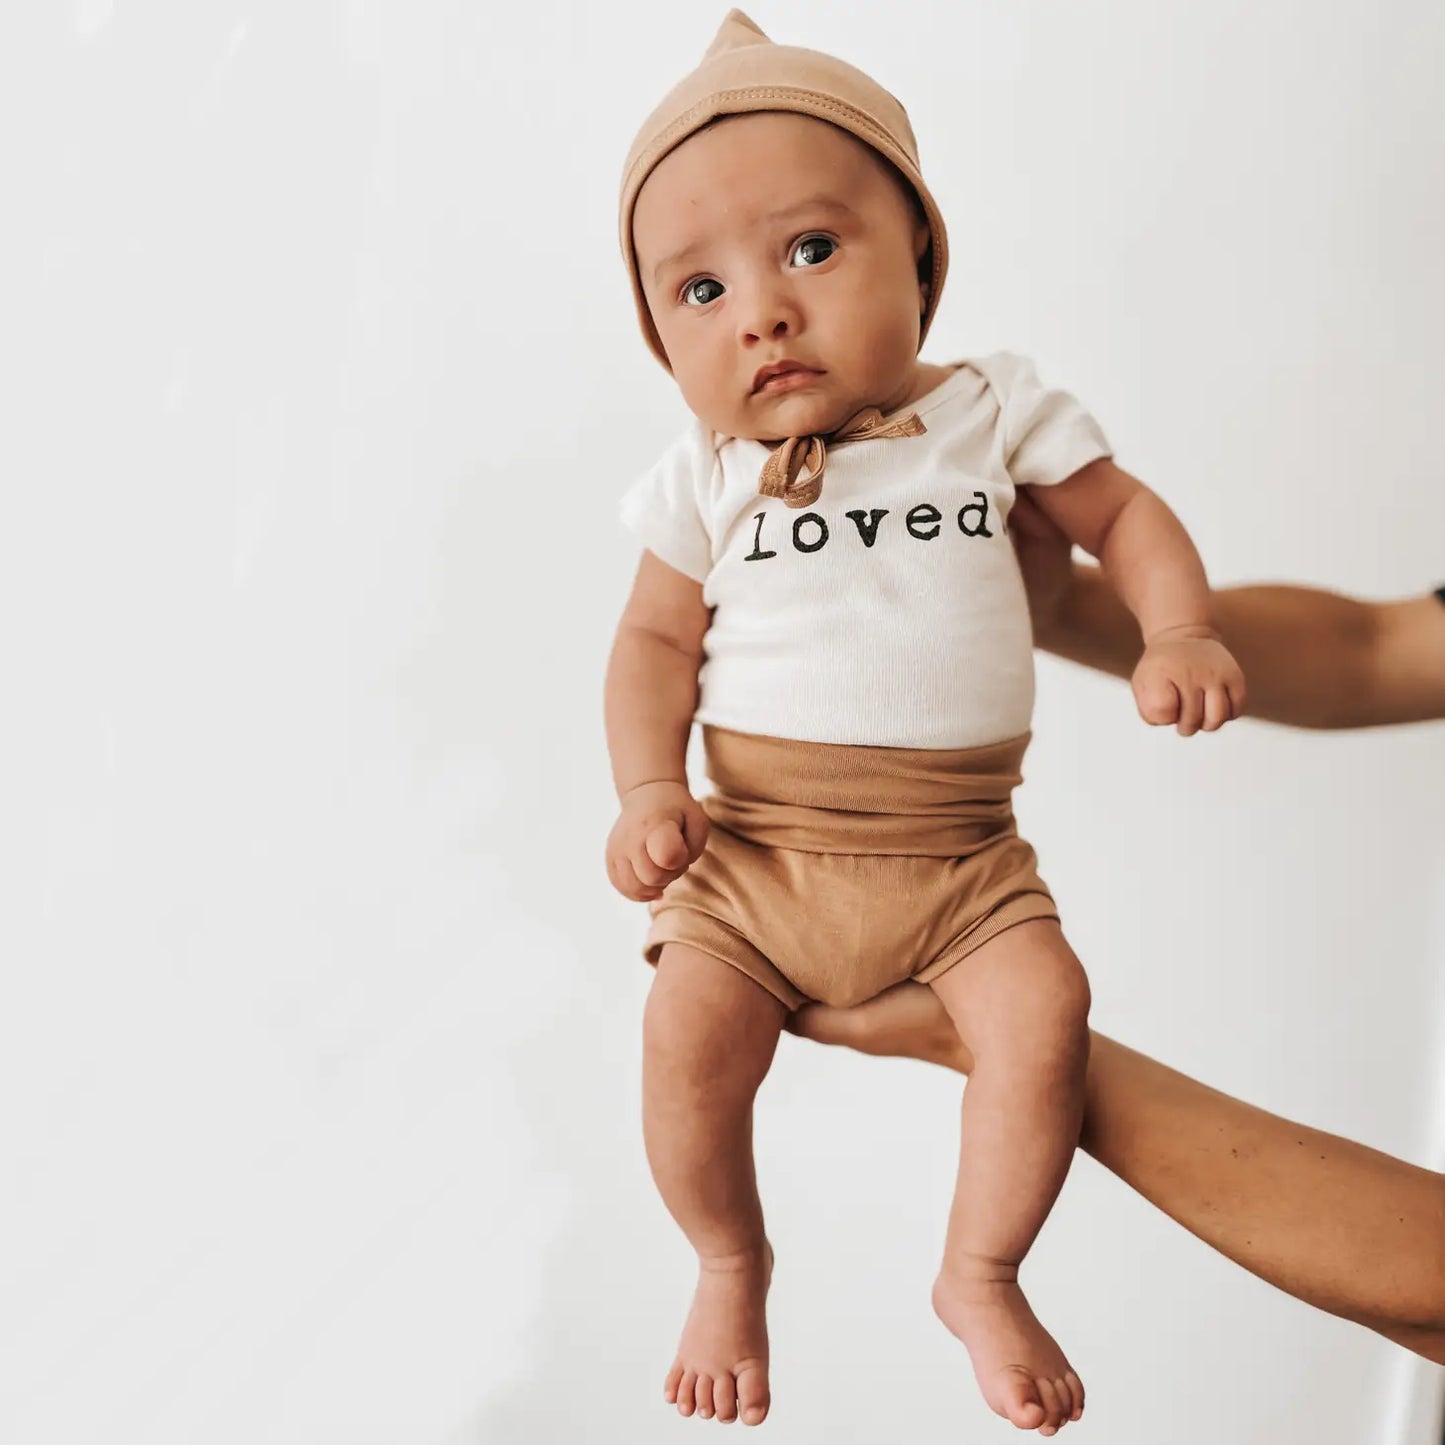 Loved Organic Baby Bodysuit | Short Sleeve